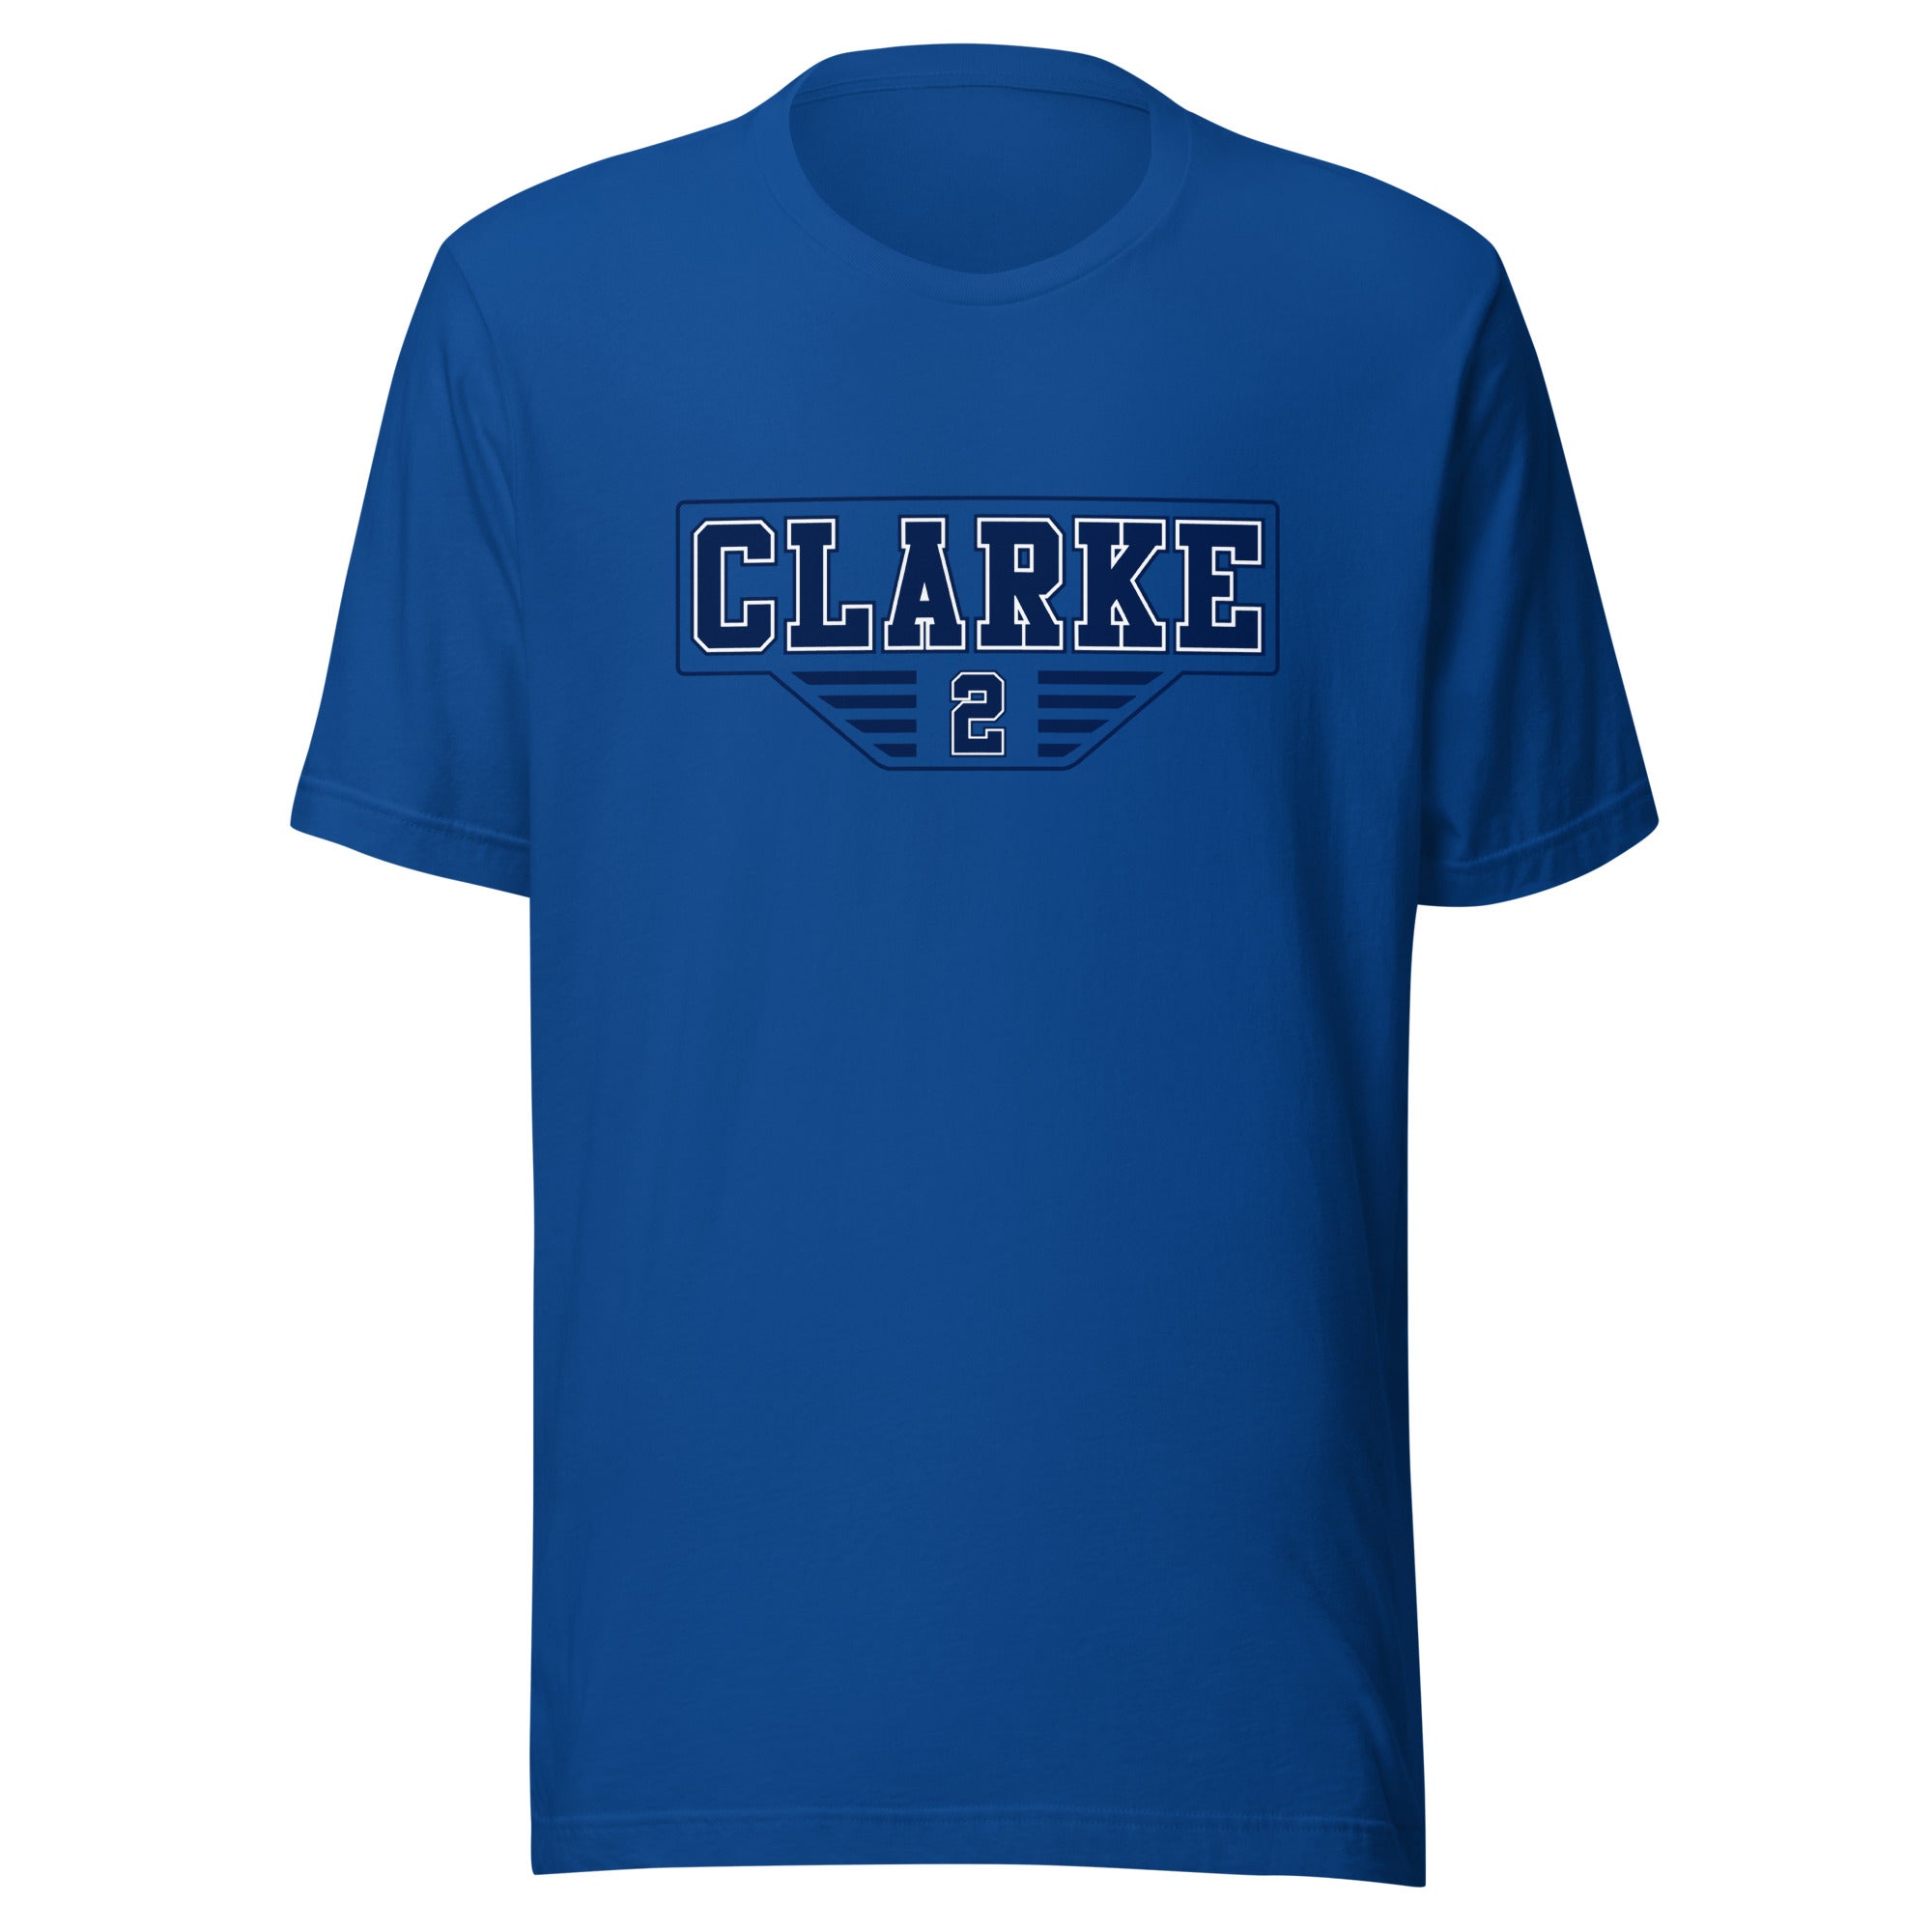 Clarke #2 - Unisex t-shirt